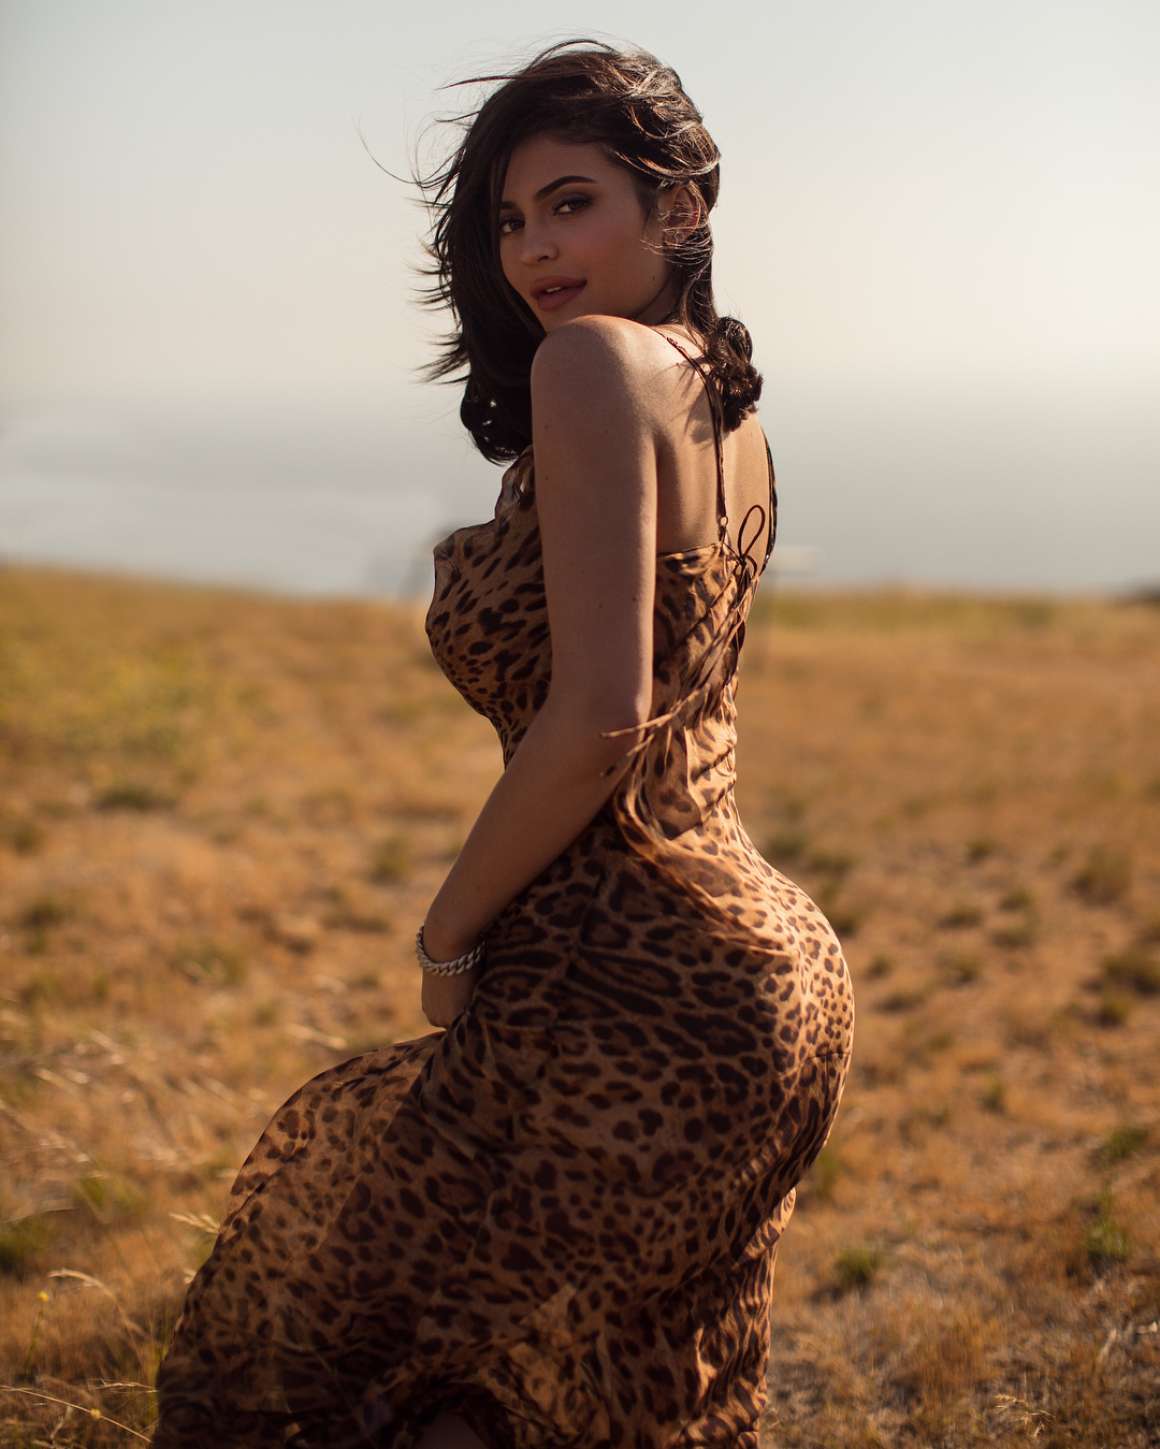 Kylie Jenner â€“ Photoshoot by Sasha Samsonova 2018